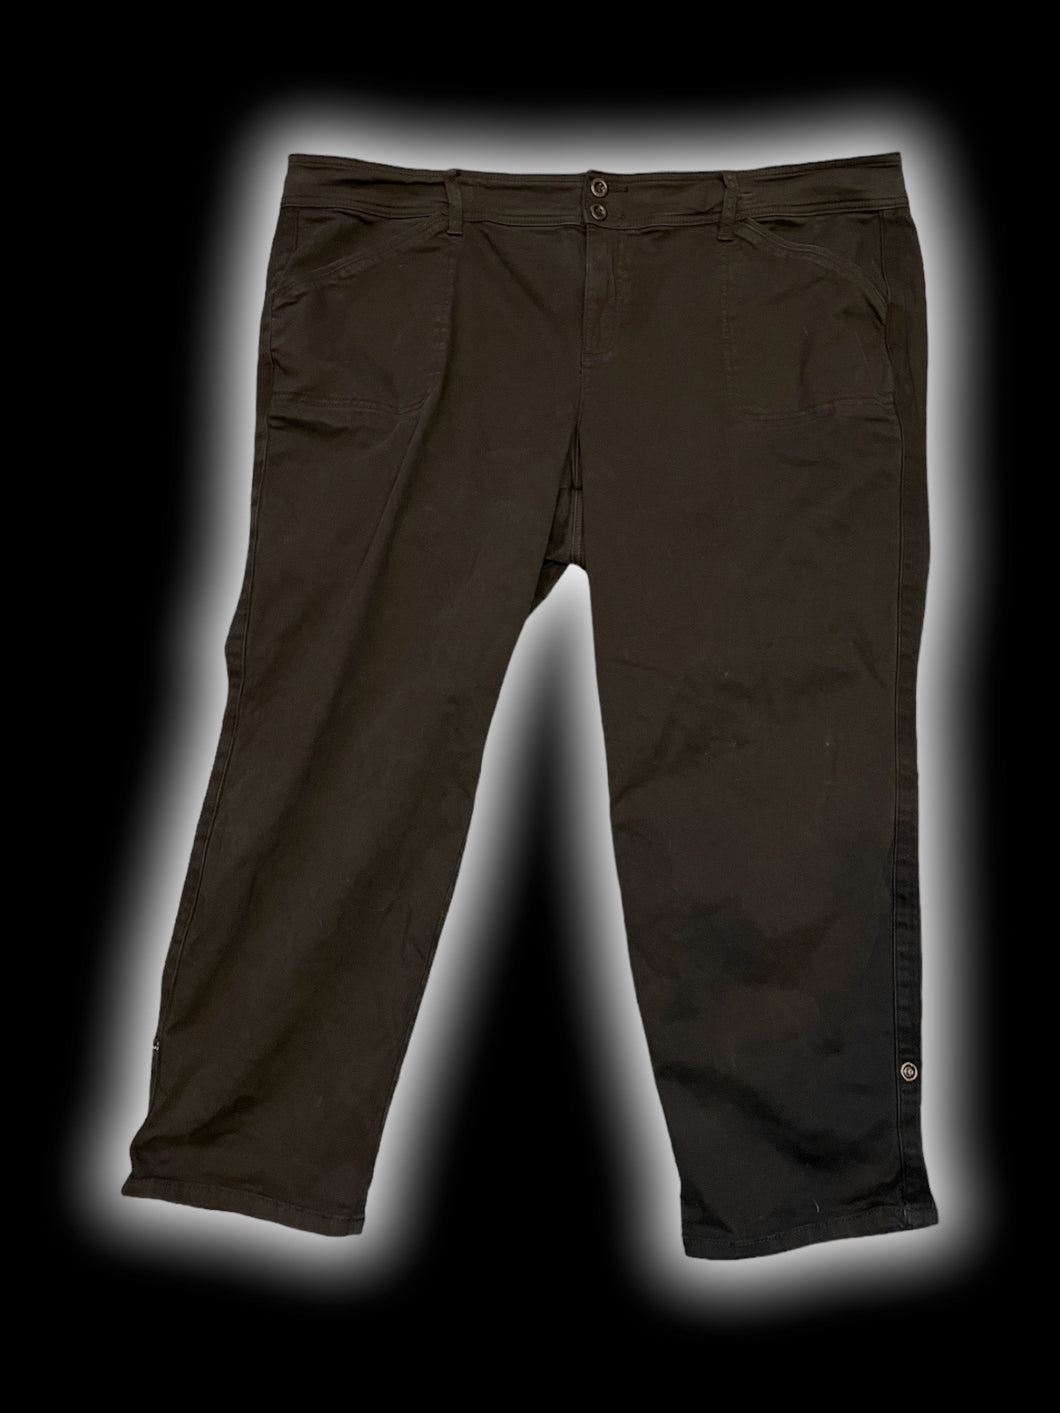 2X Black denim high waist taper leg capris w/ button tab hem, pockets, belt loops, & two button/zipper closure